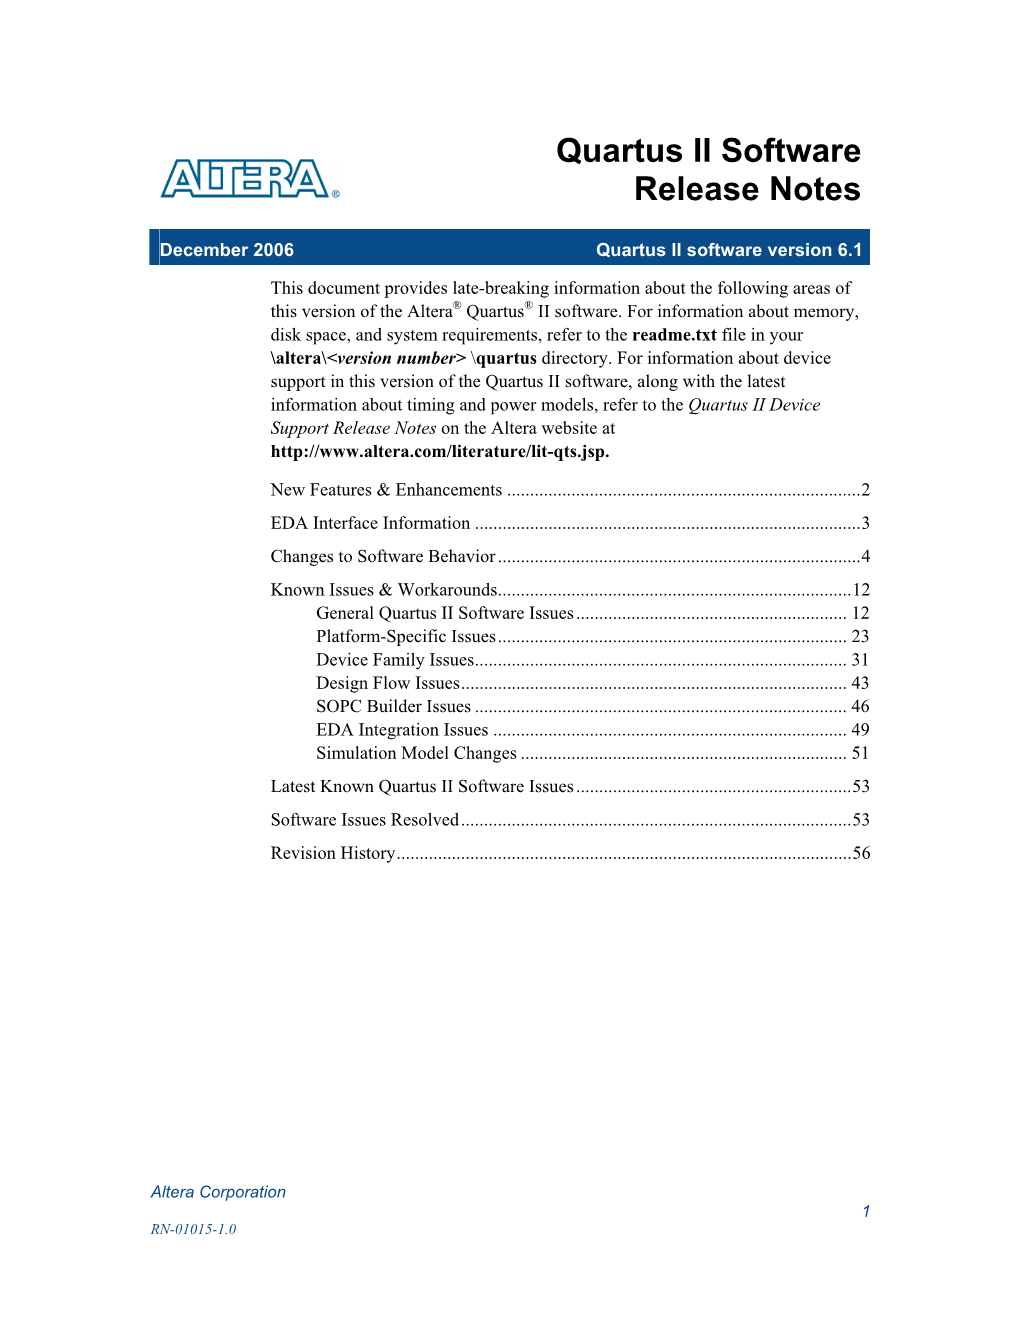 Quartus II Software Version 6.1 Release Notes